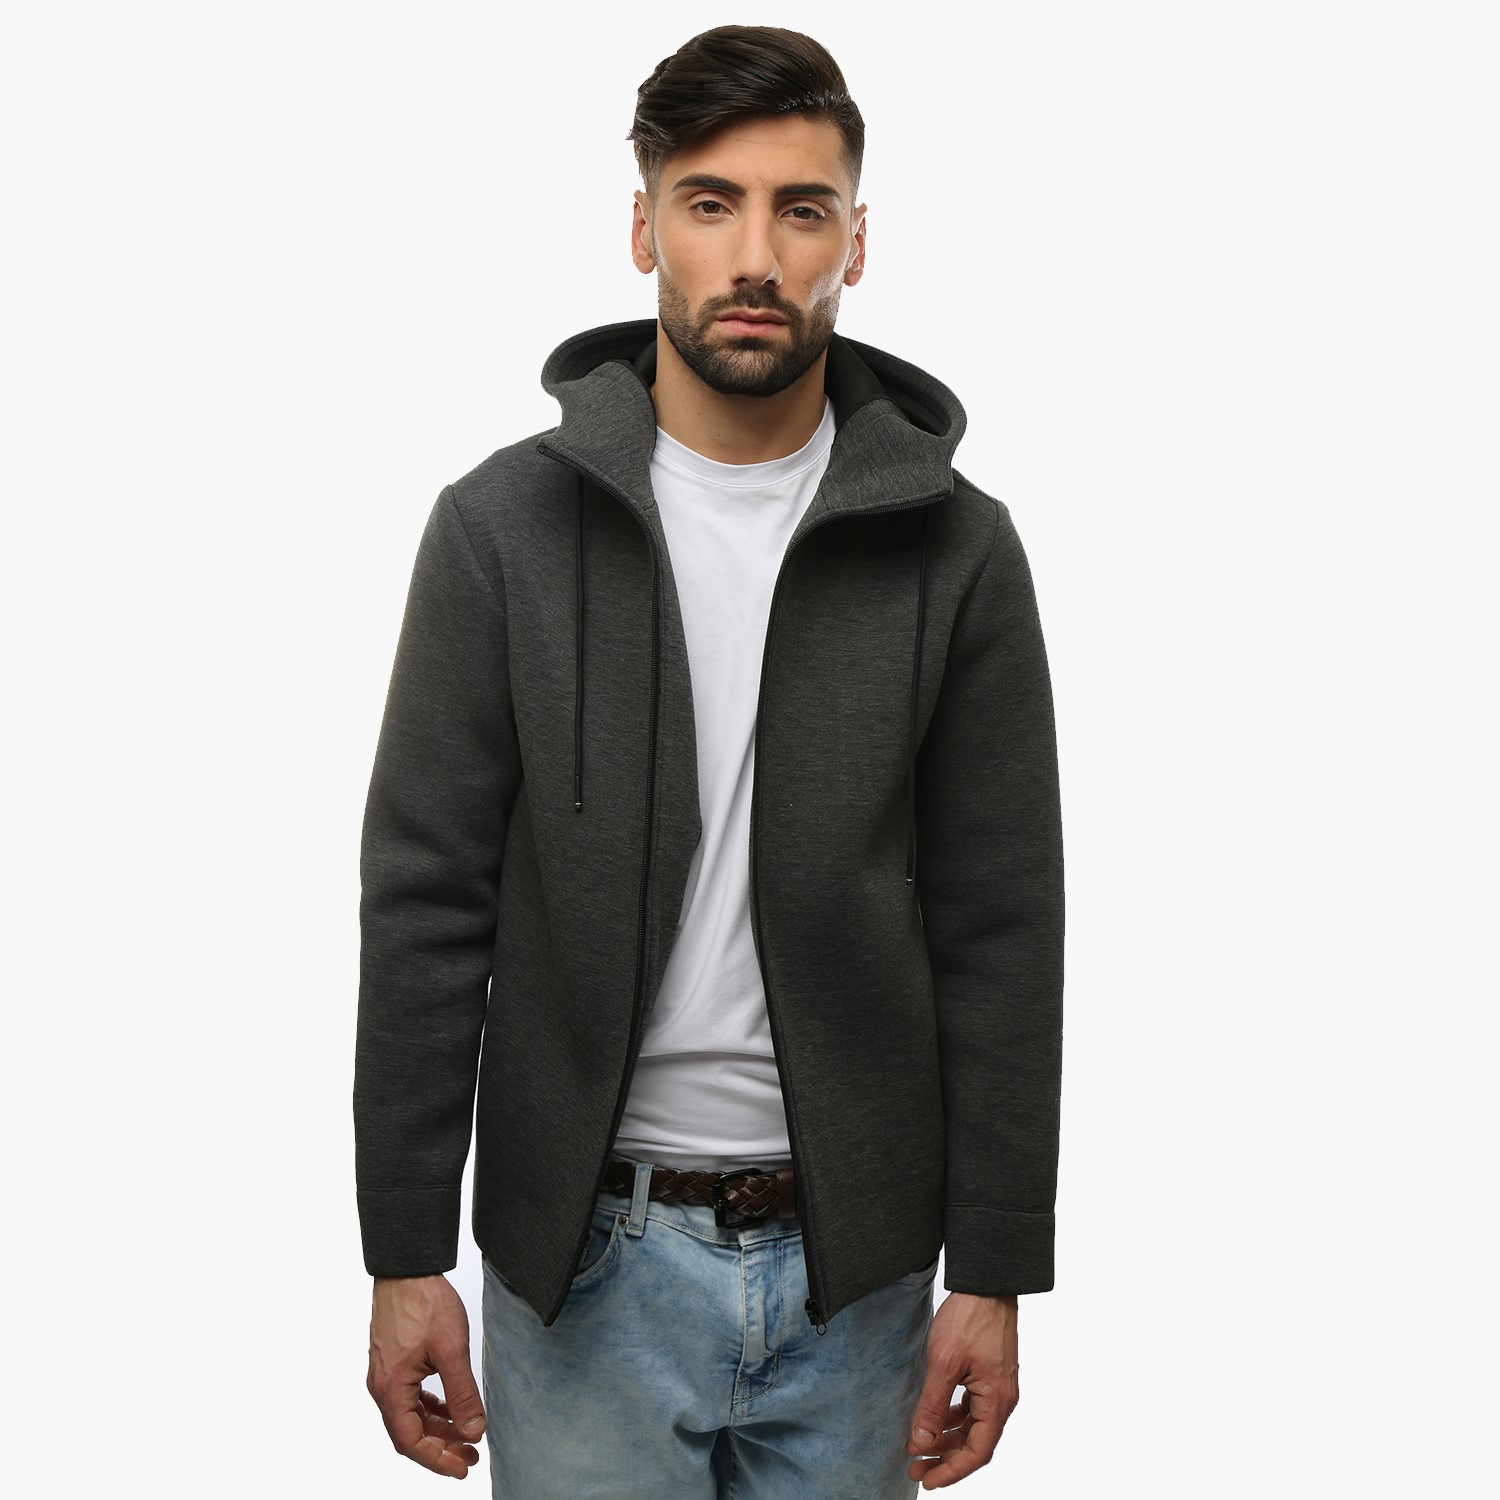 Scuba hoodie sweatshirt | Sweatshirts | Clothing Man Vertical Fashion